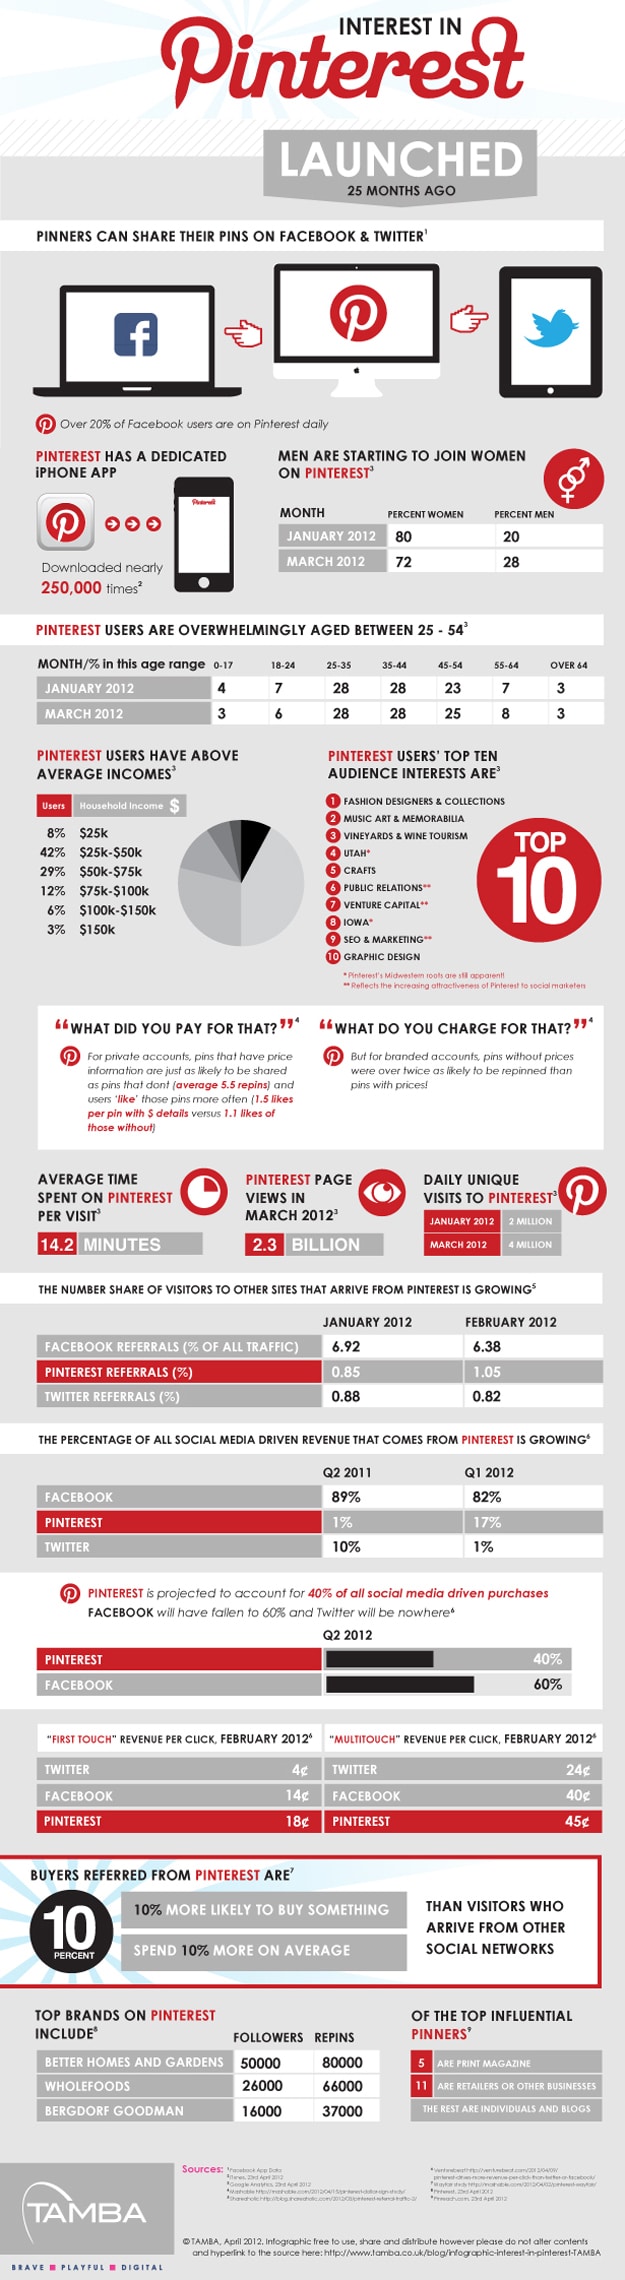 Pinterest Surpasses Twitter & Facebook In One Area [Infographic]